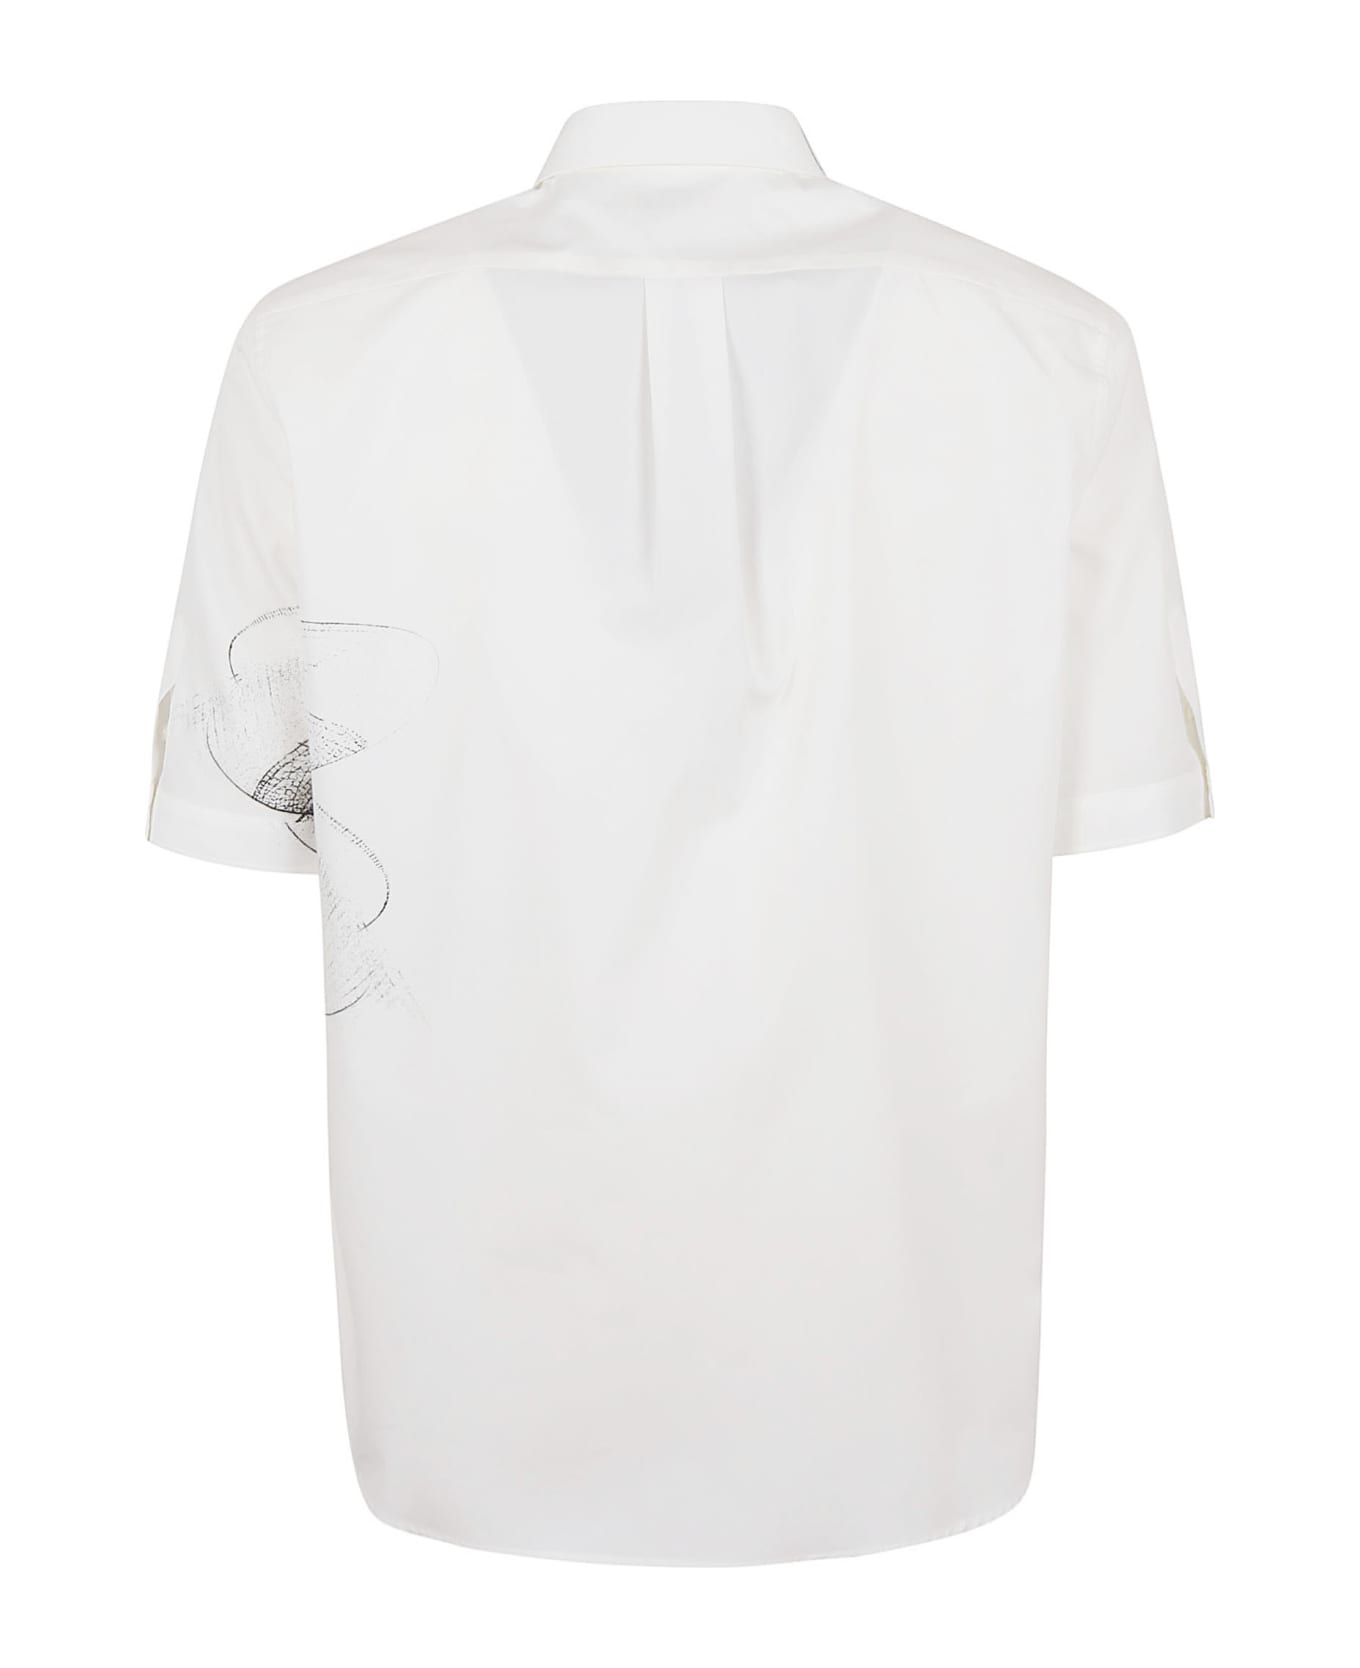 Alexander McQueen Dragonfly Shirt - White Black シャツ